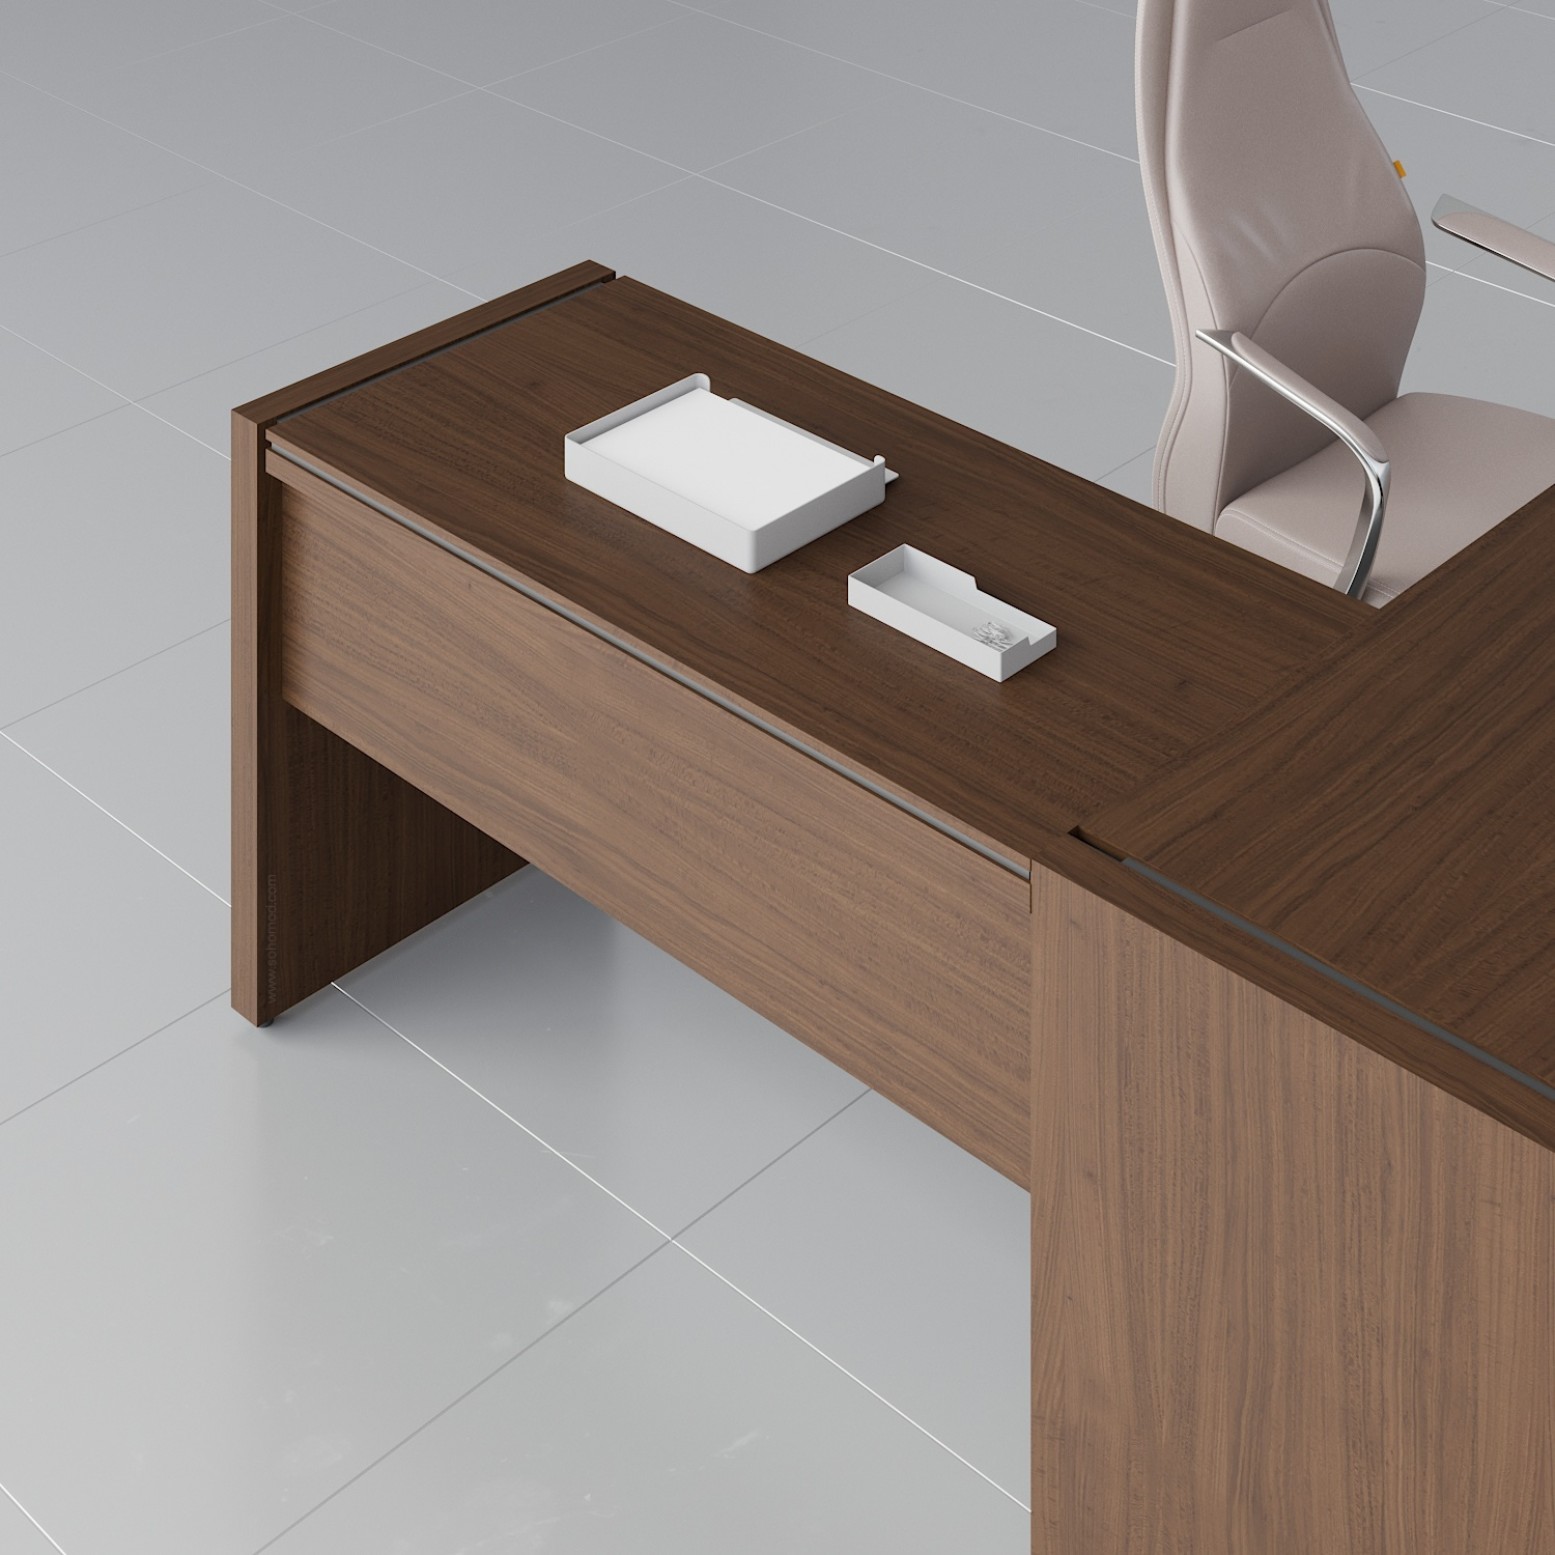 Status Right Side Desk Extension X15 Chestnut Buy Online At Best